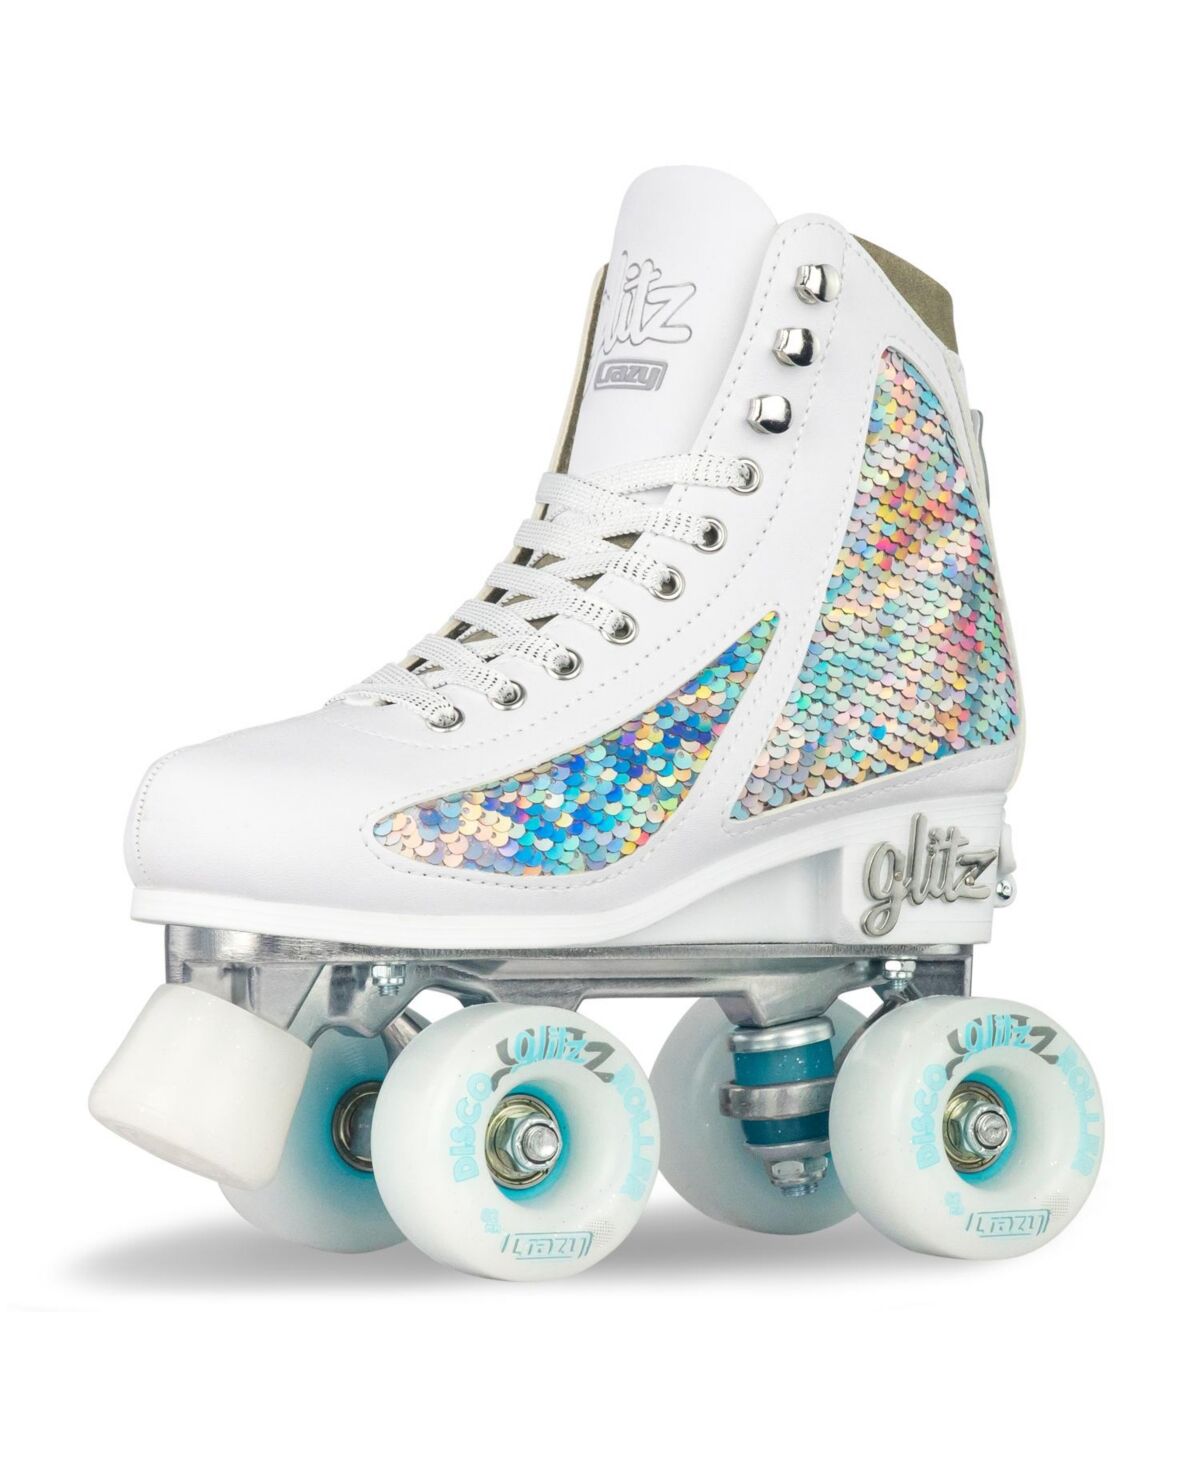 Crazy Skates Glitz Adjustable Roller Skates For Women And Girls - Size Adjustable To Fit 4 Sizes - Diamond